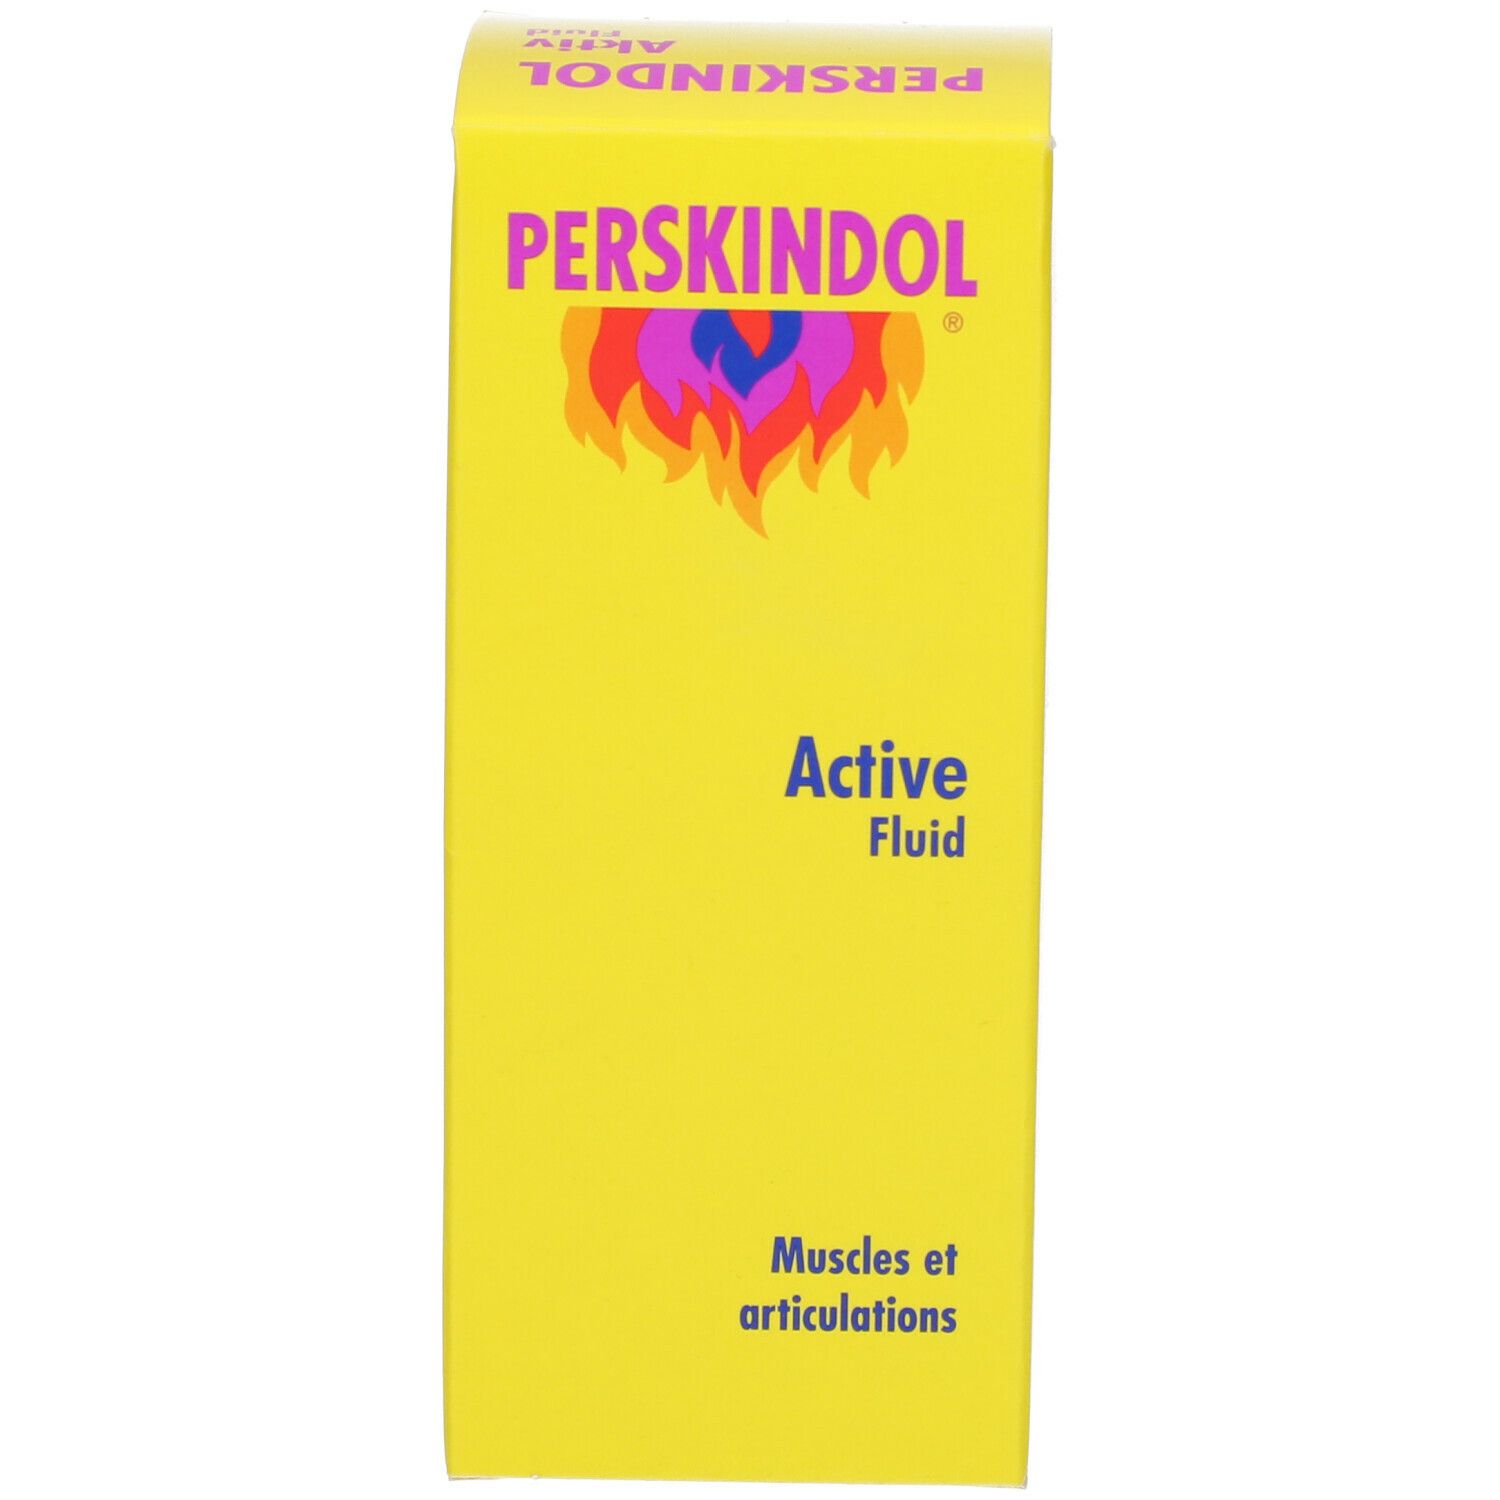 PERSKINDOL® Active Fluid